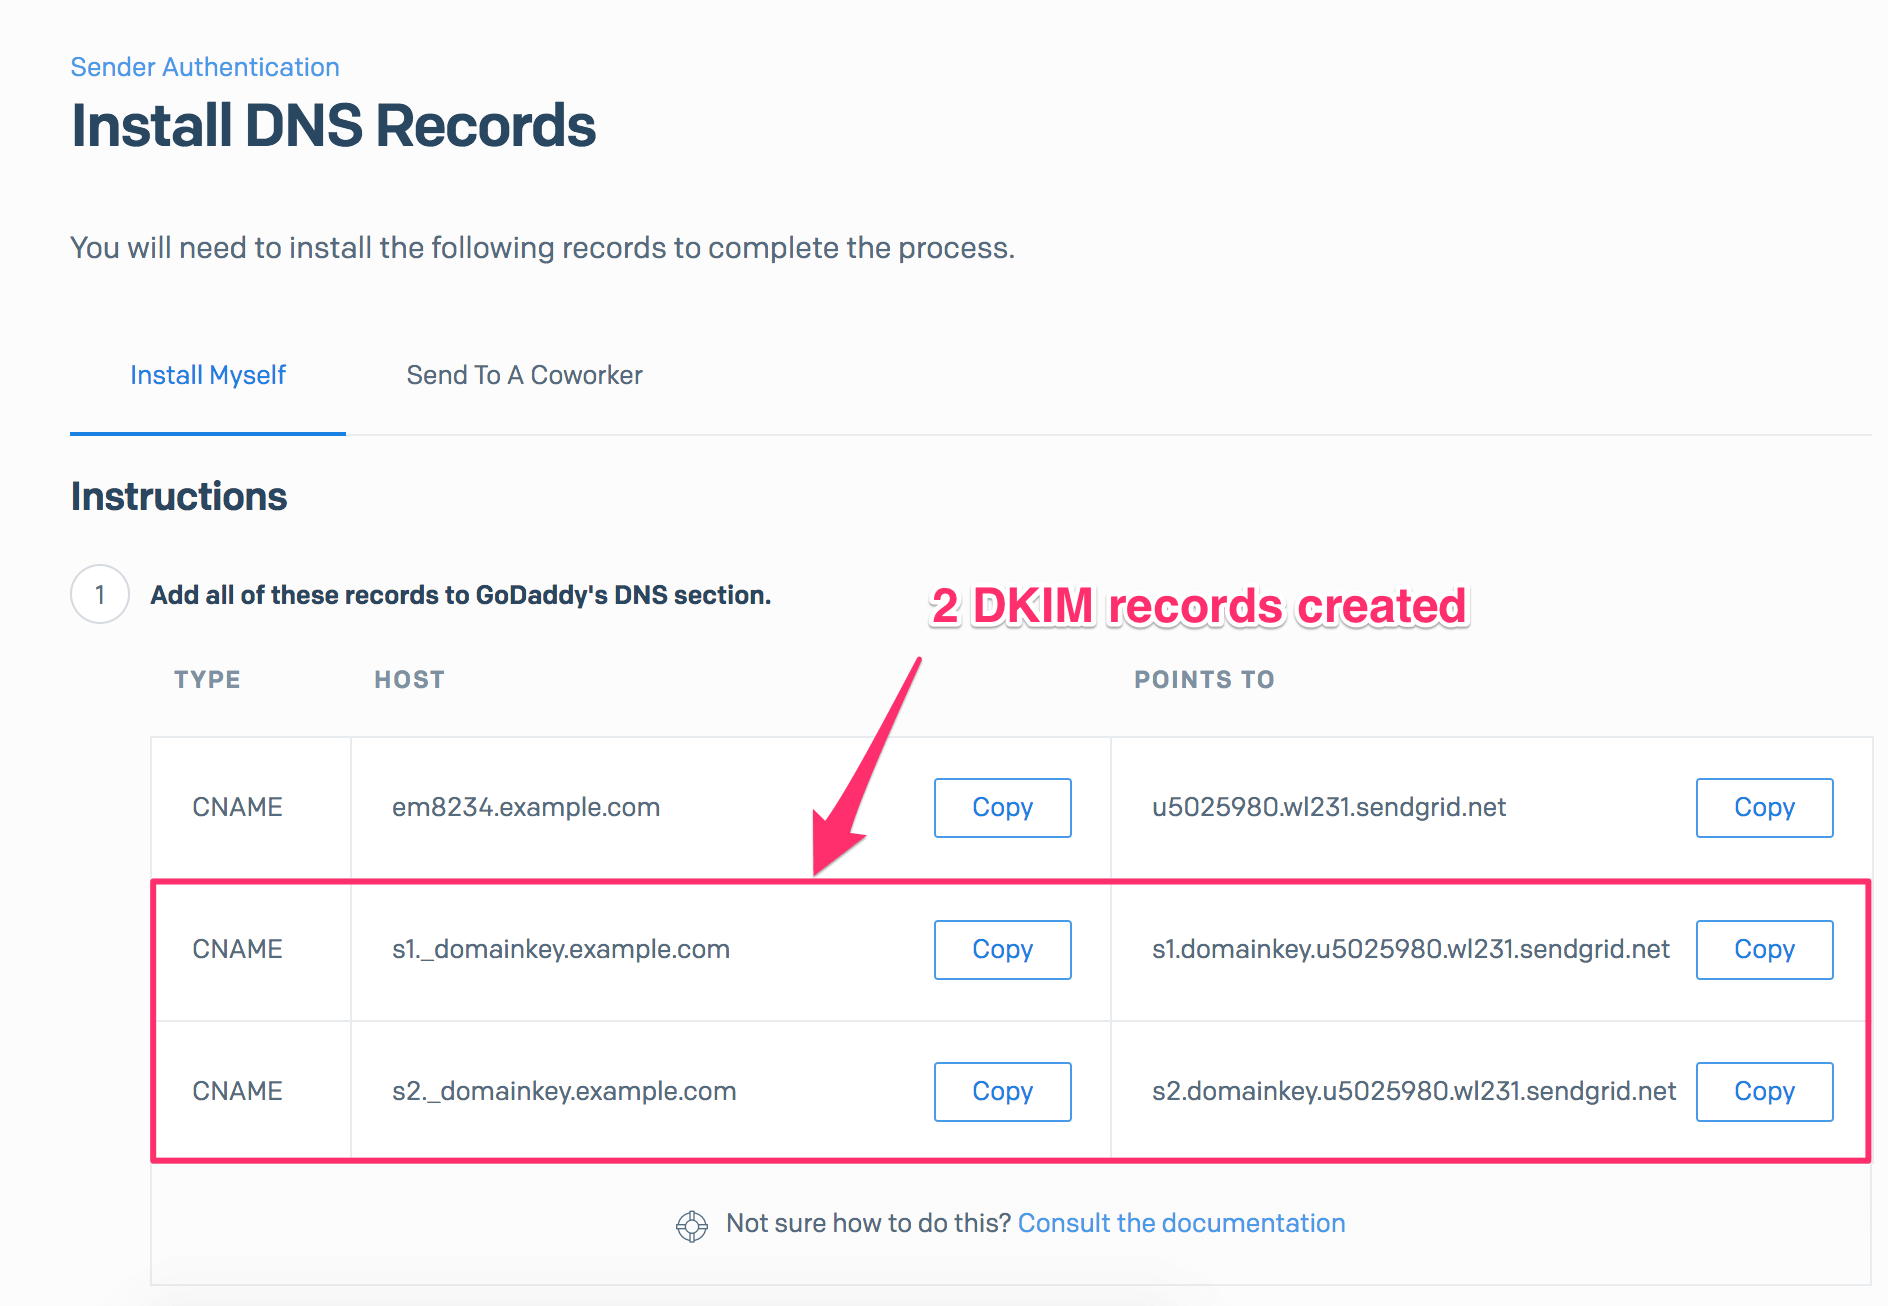 Generated DKIM records in SendGrid